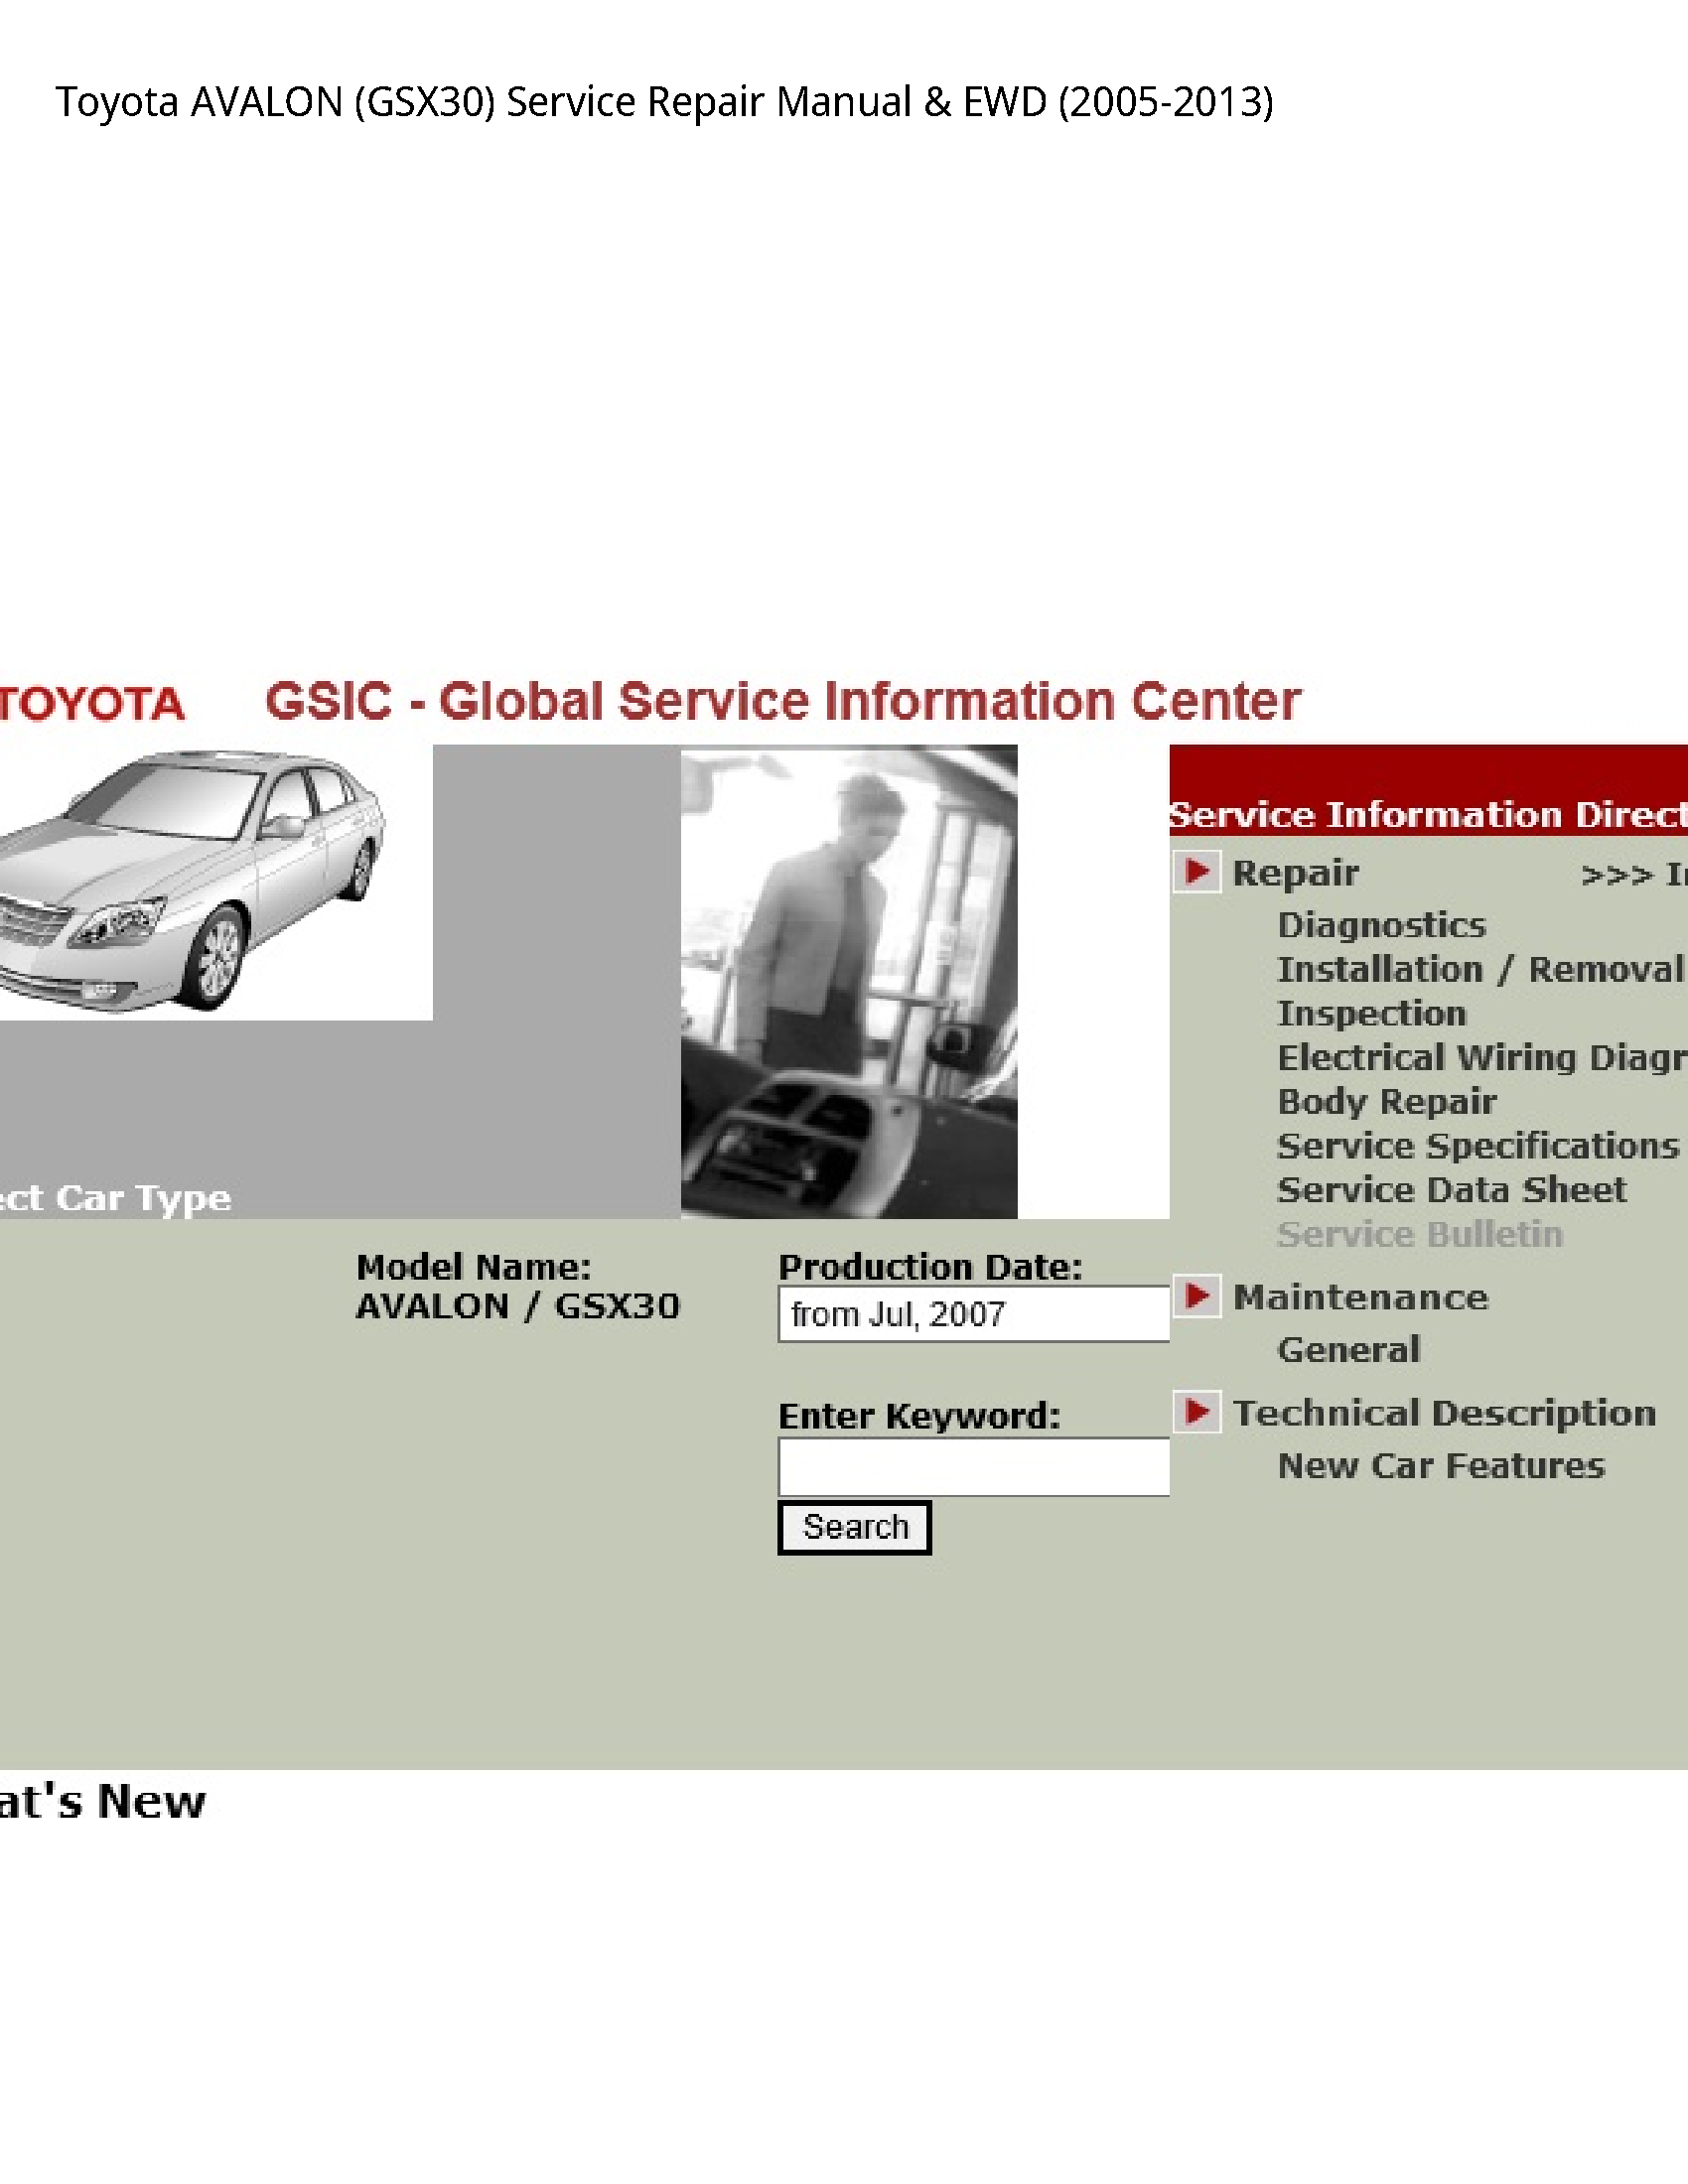 Toyota (GSX30) AVALON manual